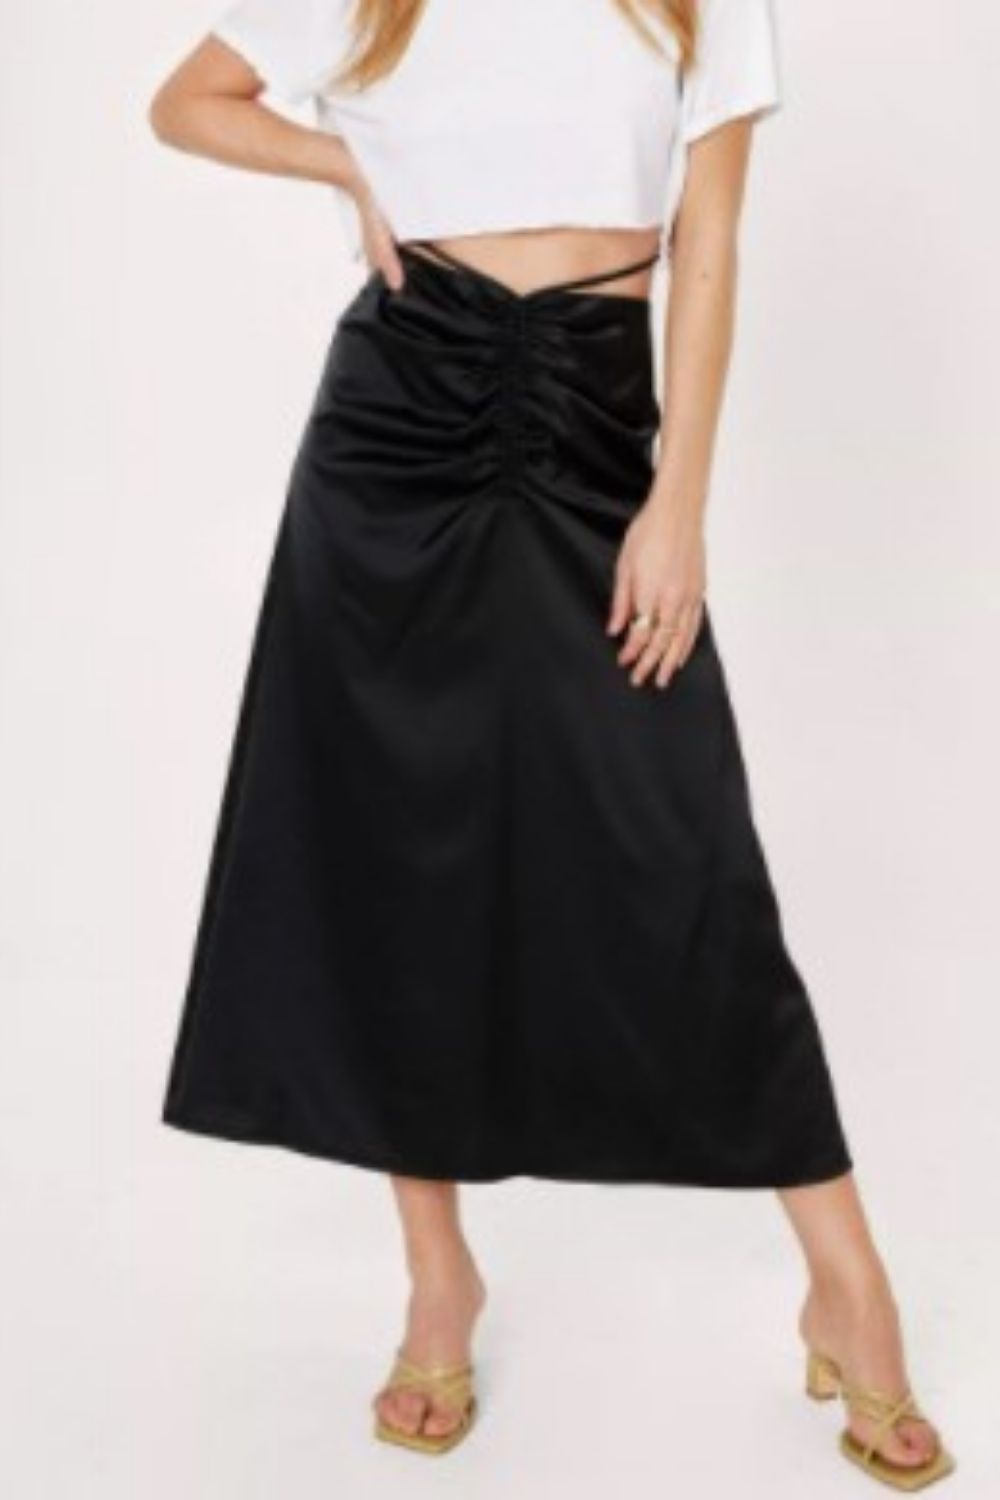 Tie-Up Satin Black Skirt